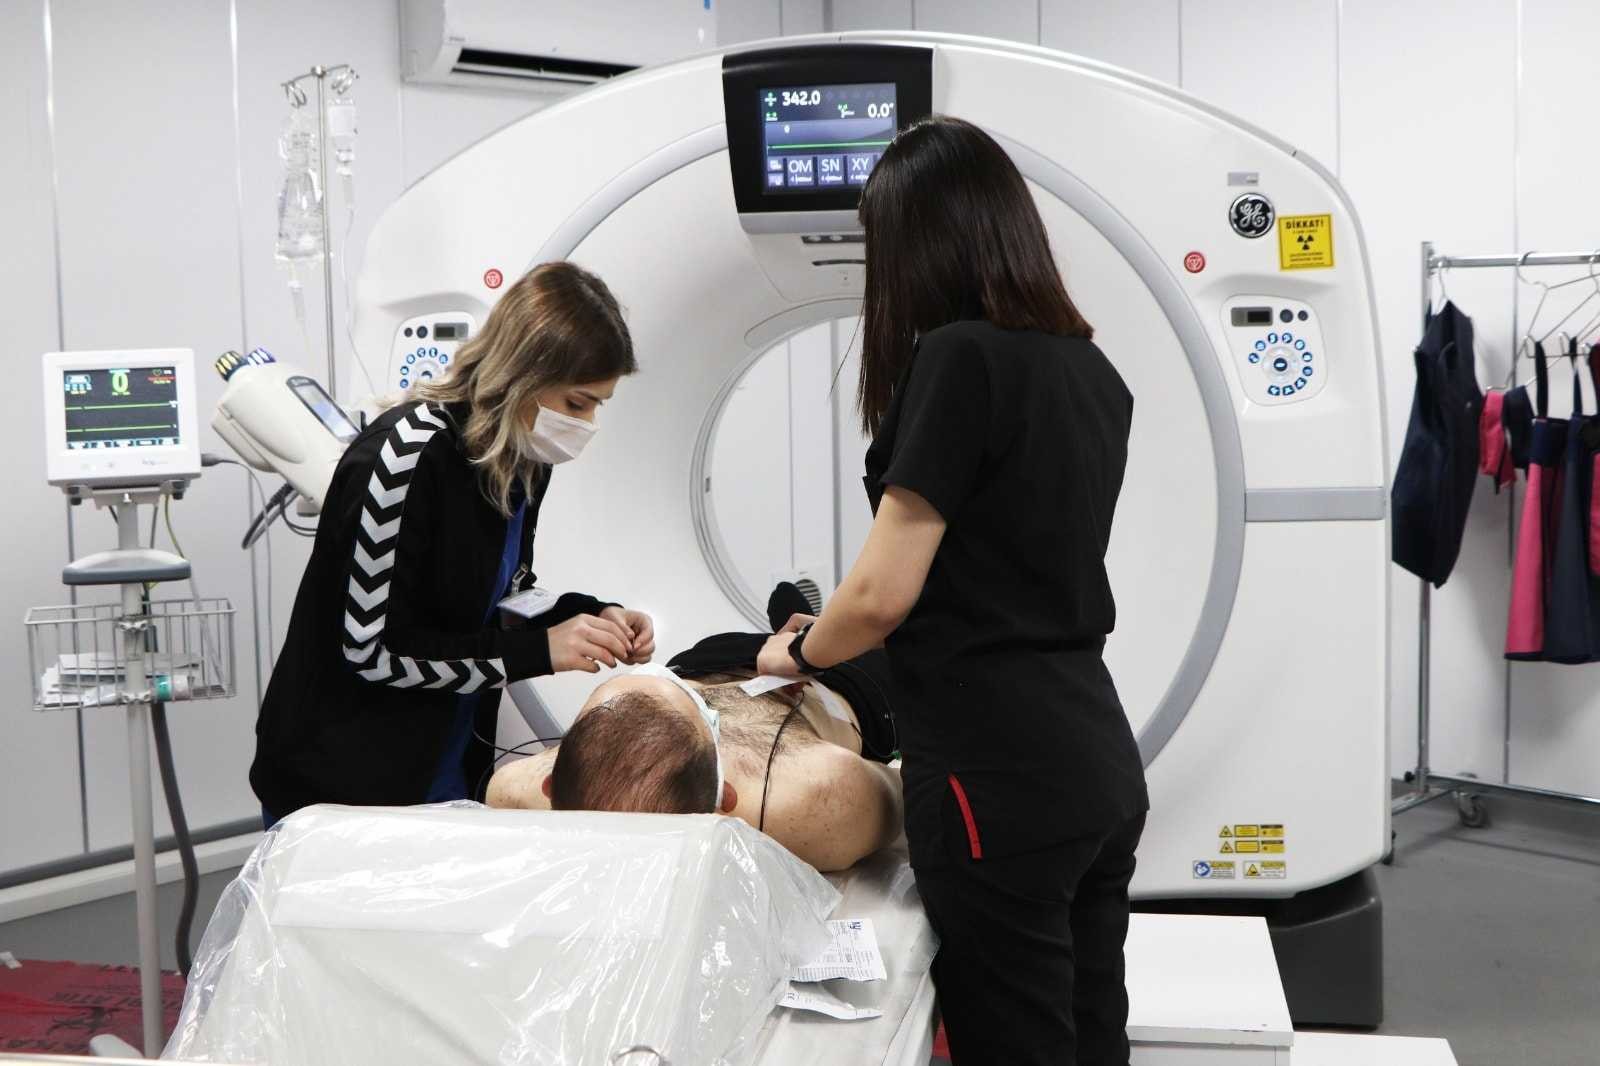 Kütahya’ya yeni nesil yüksek teknoloji tomografi cihazı #kutahya